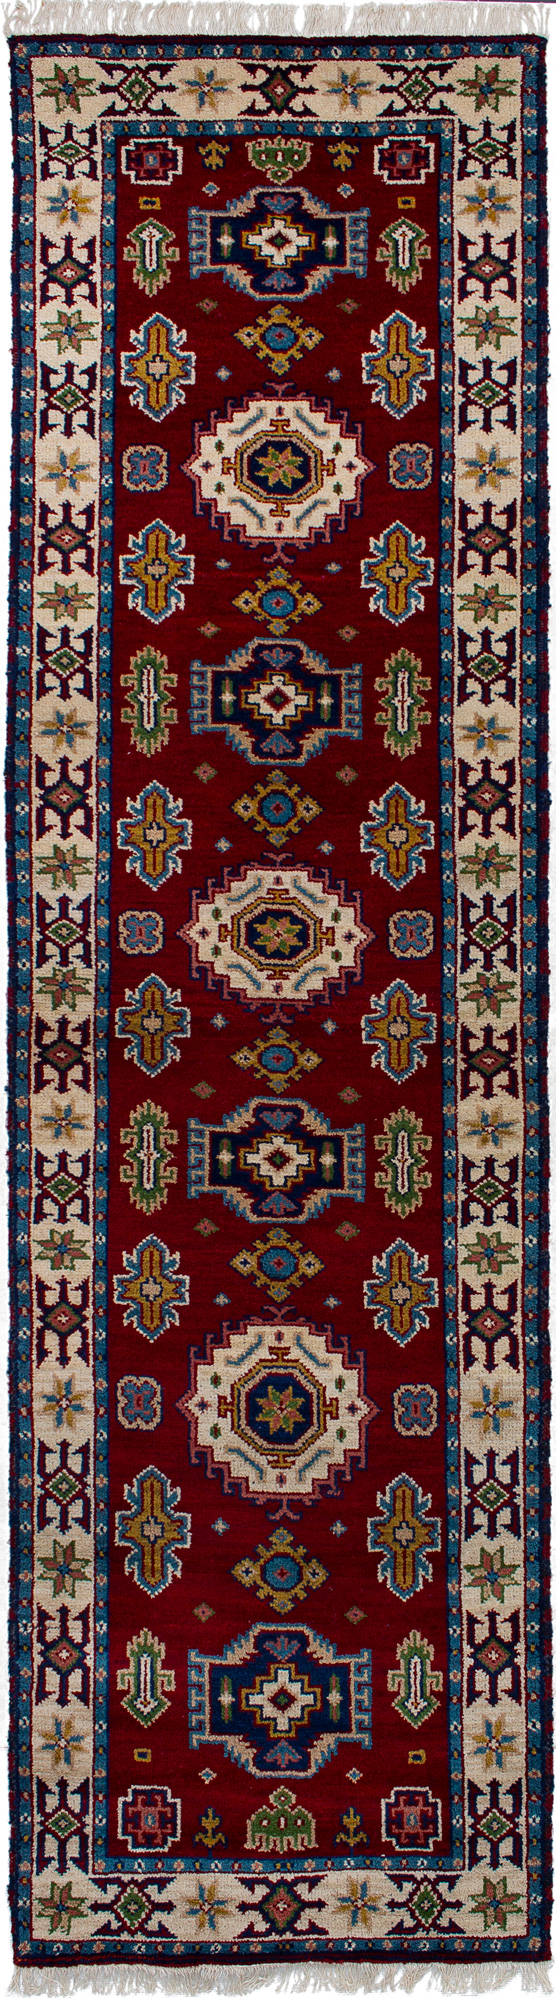 Hand-knotted Royal Kazak Dark Red Wool Rug 2'9" x 9'9"  Size: 2'9" x 9'9"  